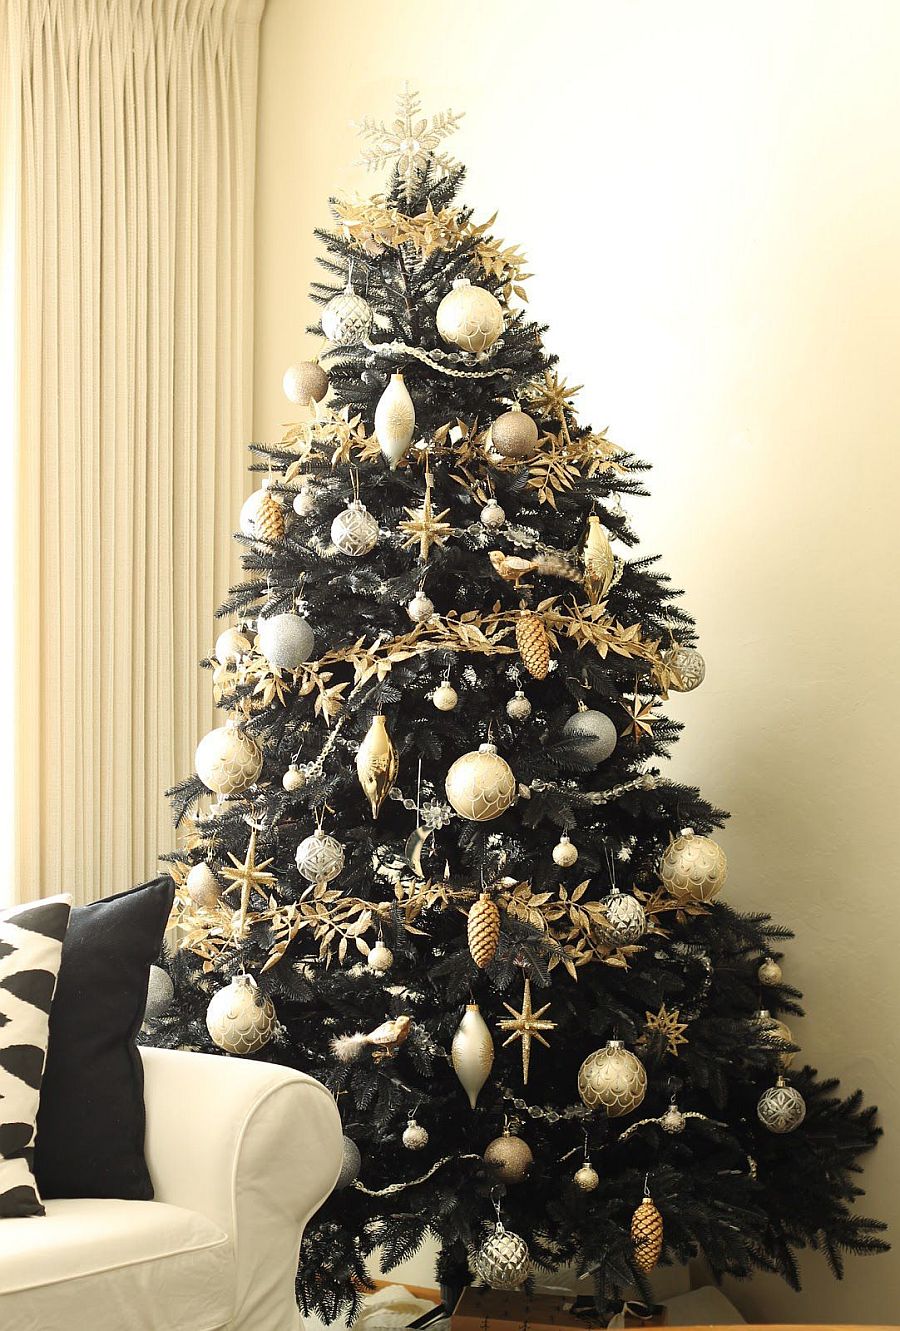 Black is the New Festive: Black Christmas Trees Steal the Spotlight ...